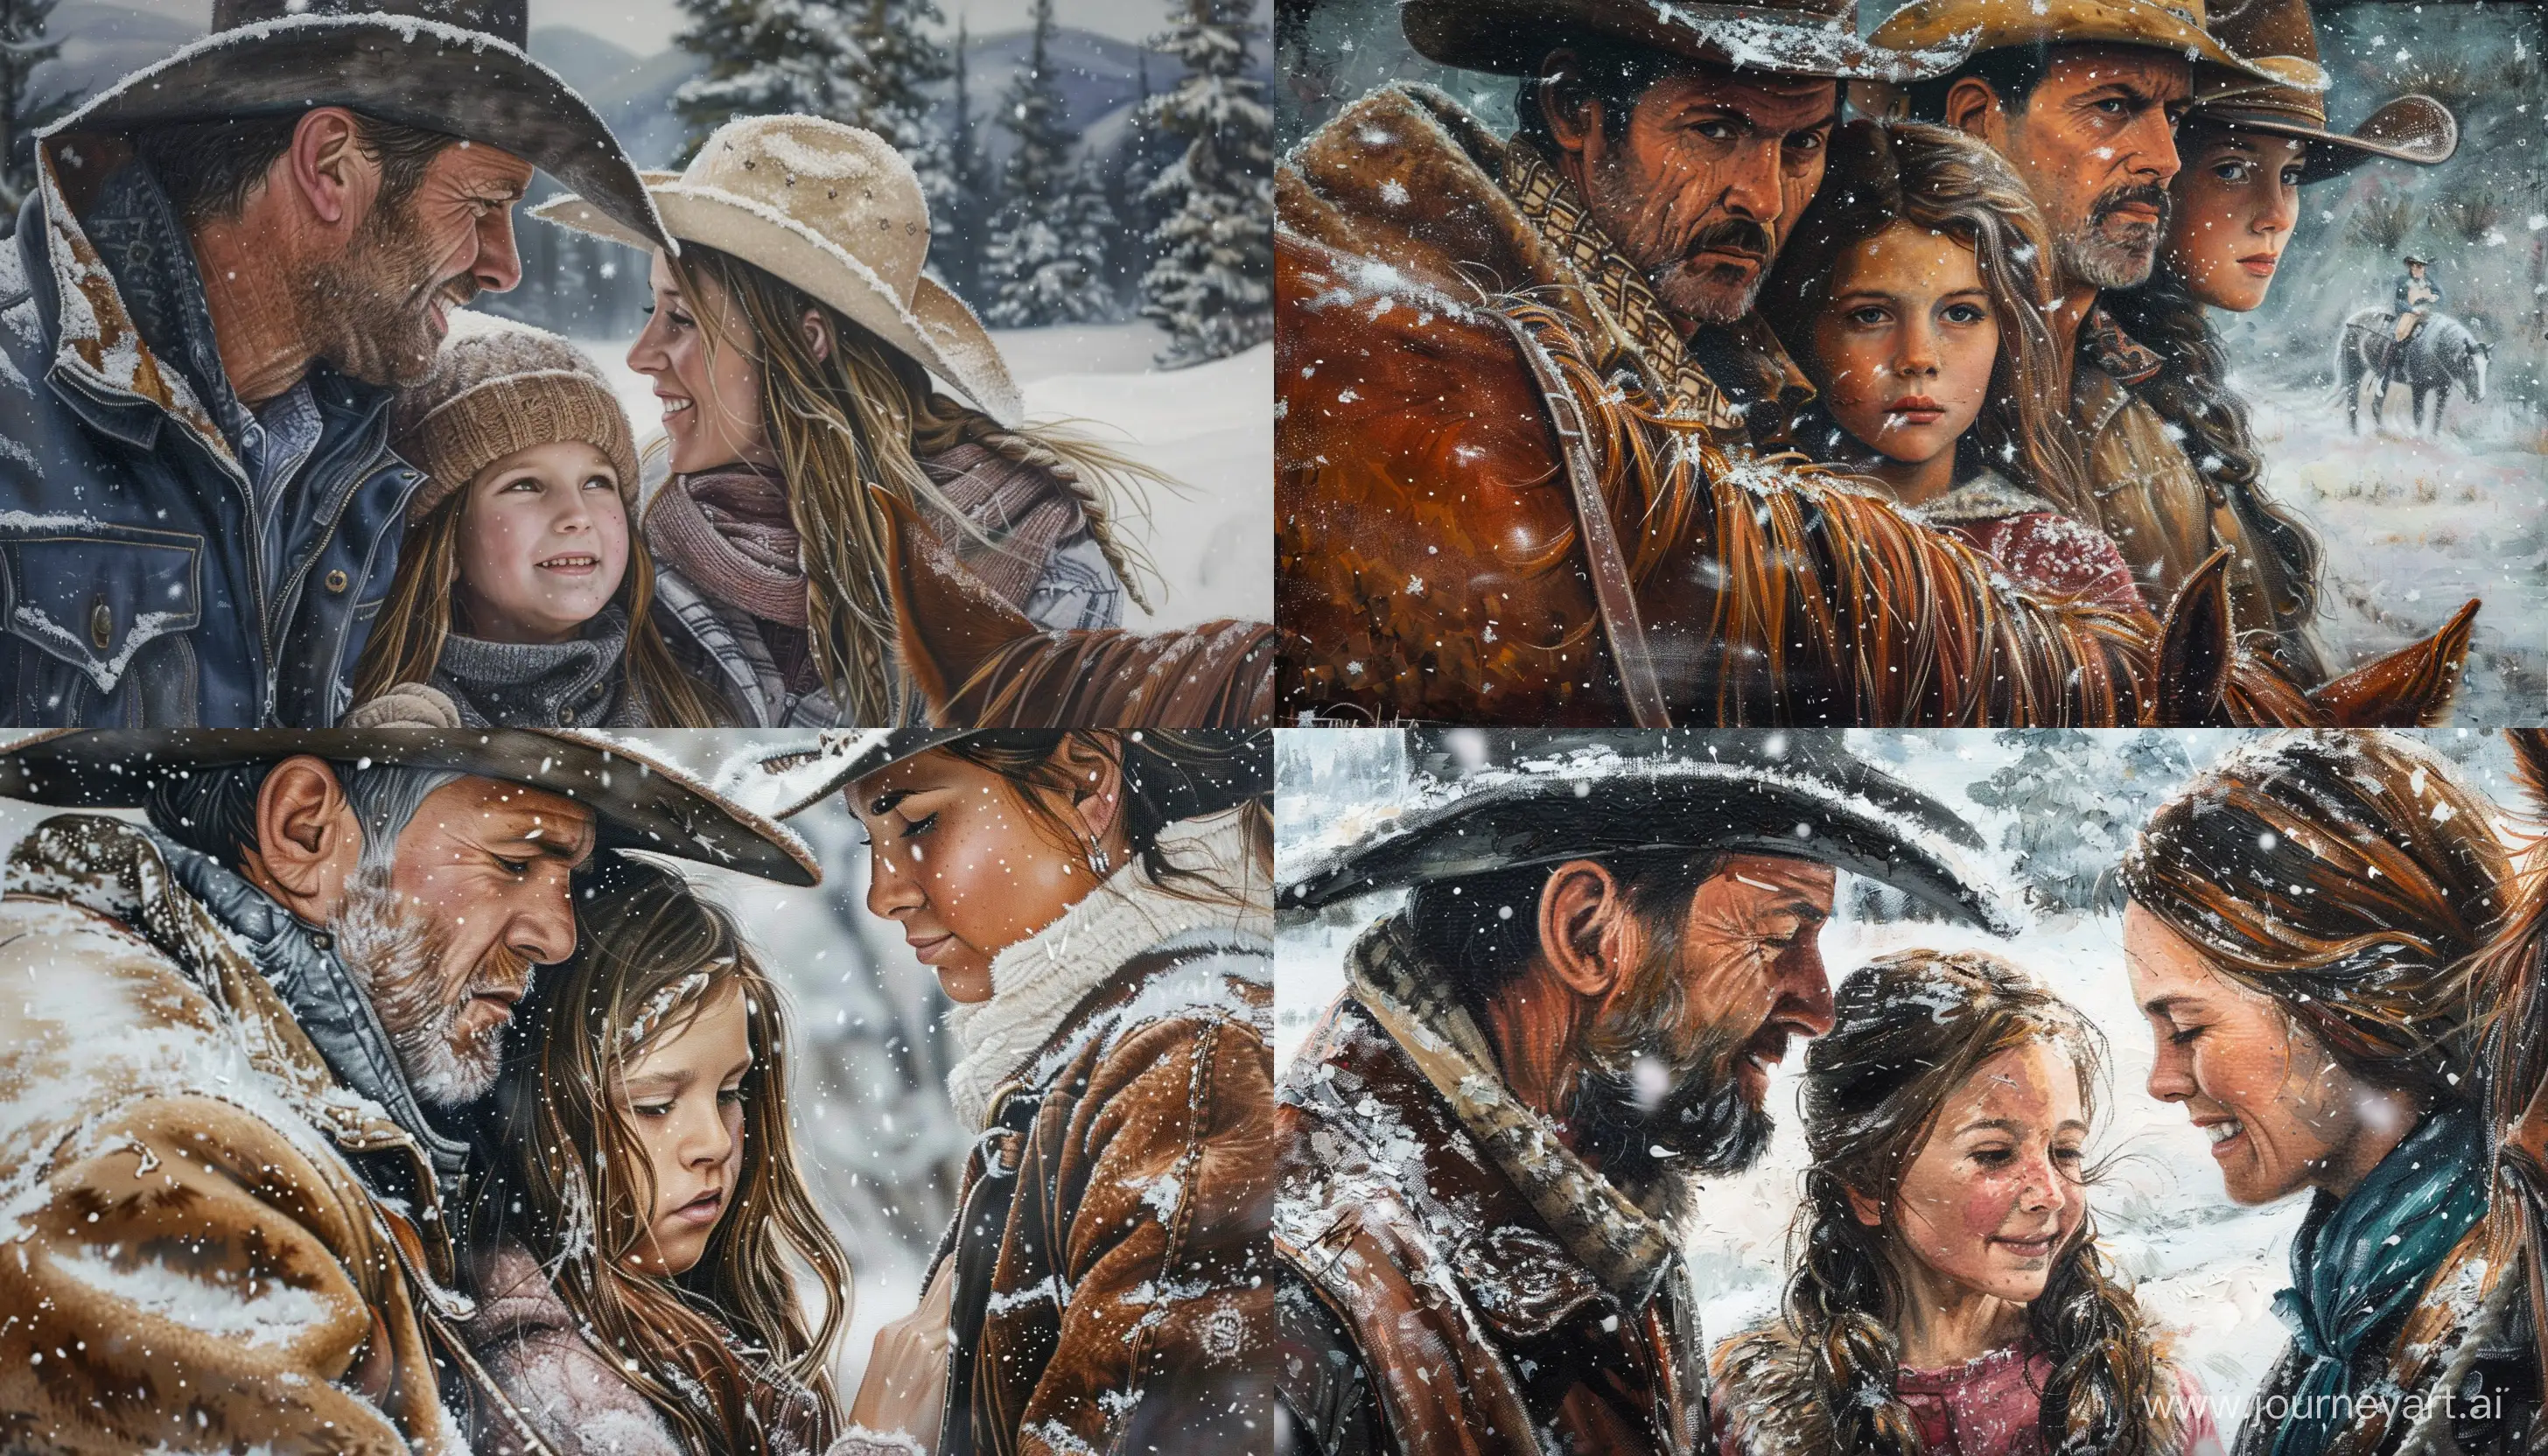 CloseUp-Family-Portrait-in-Snowy-Western-Landscape-Cowboy-Era-Nostalgia